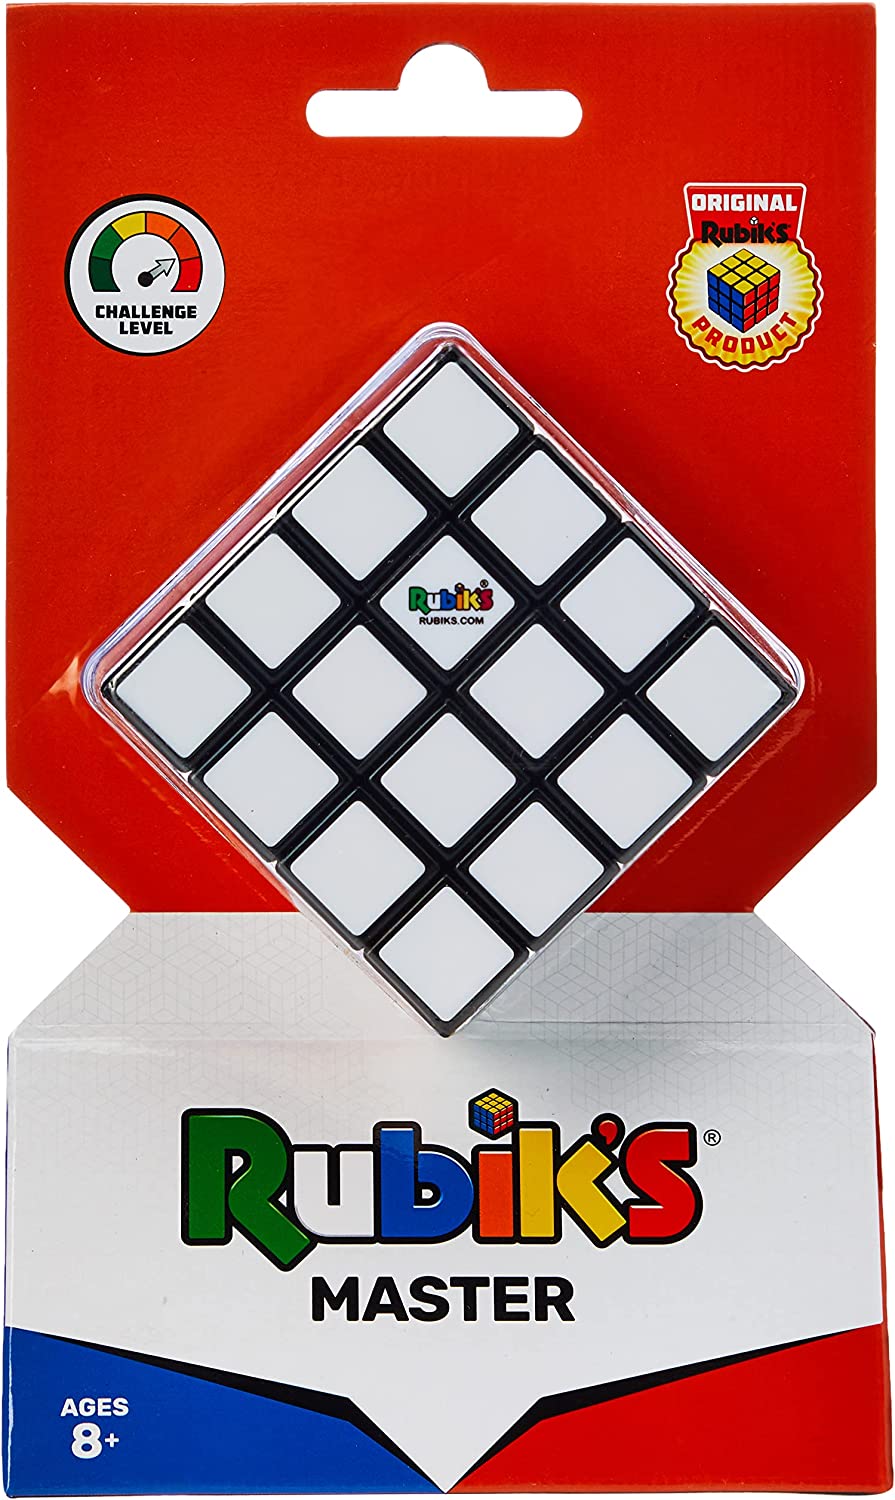 Rubiks Cube 4X4